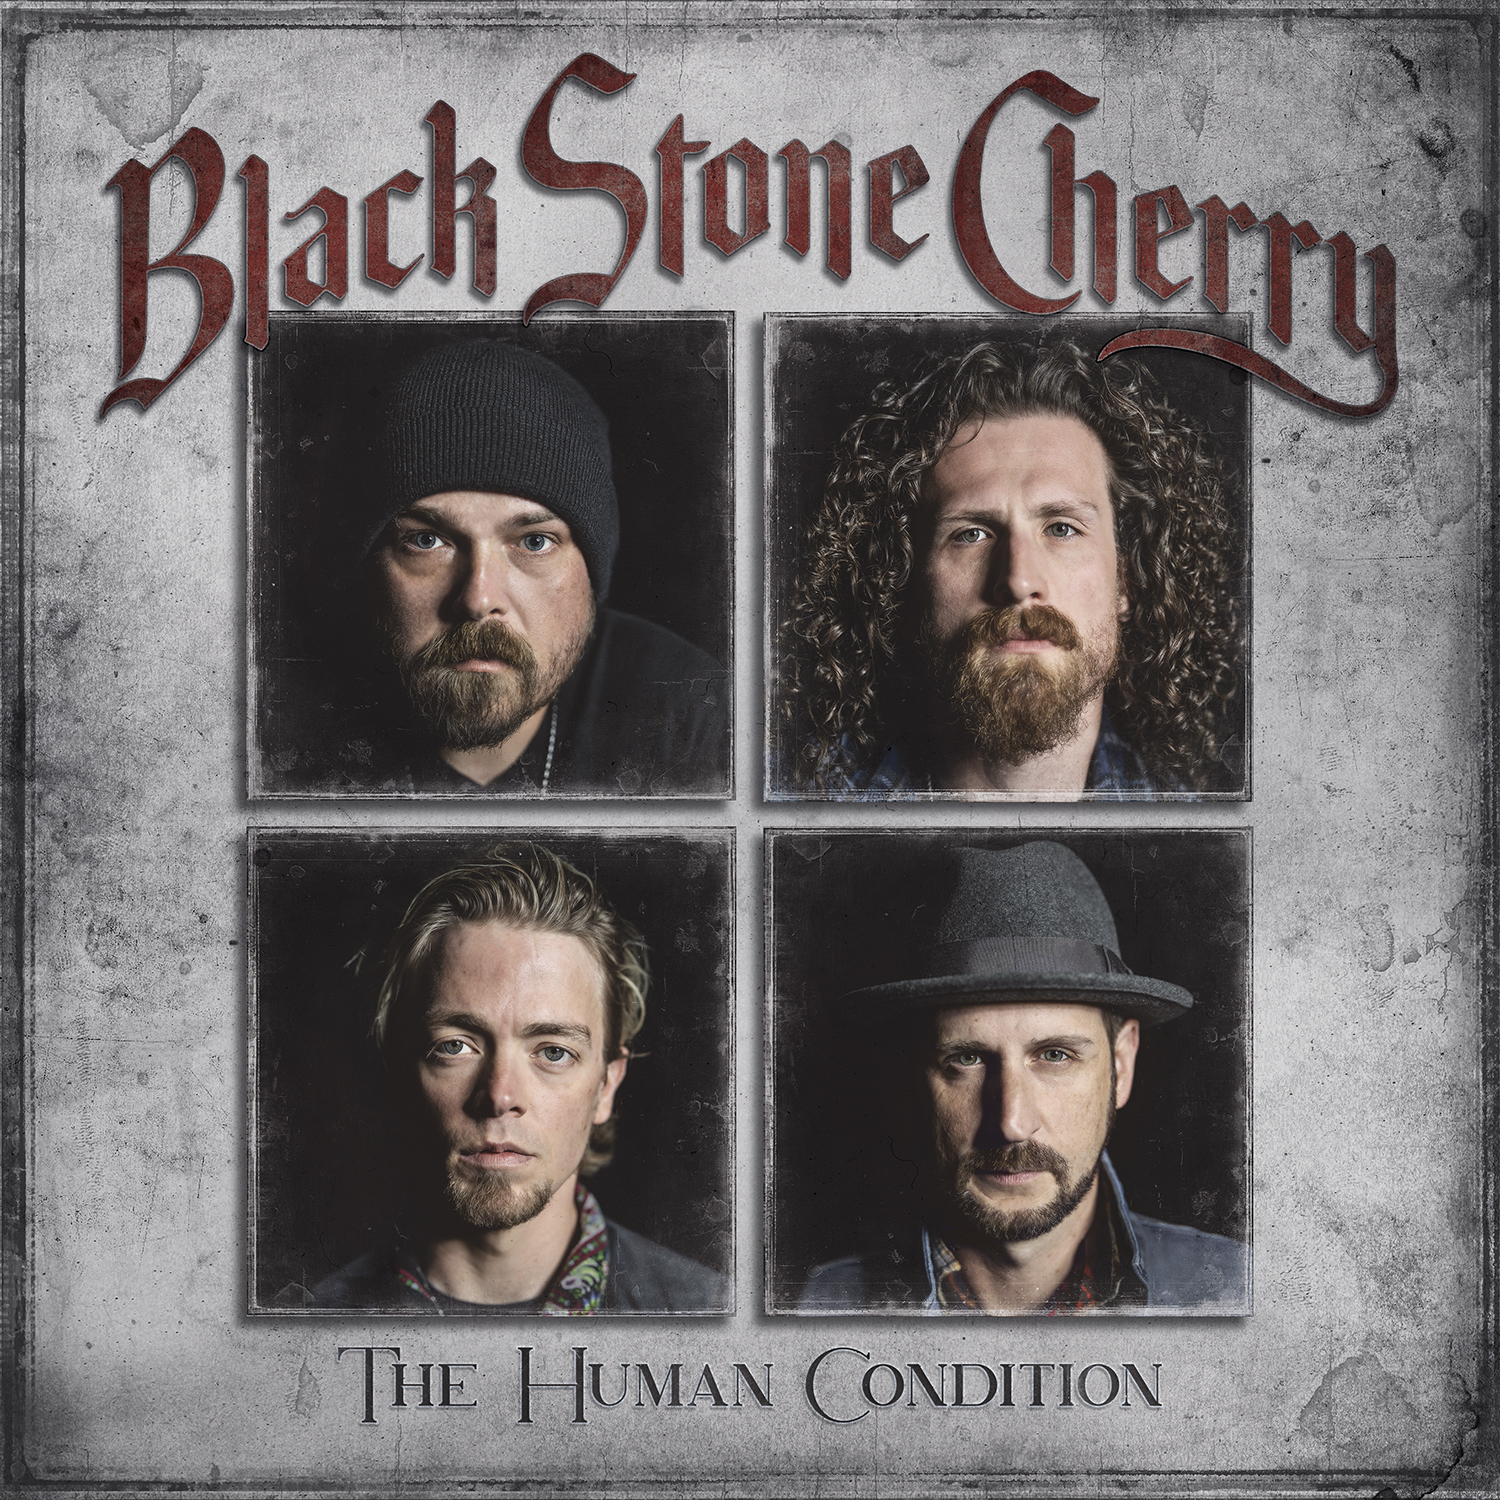 Black Stone Cherry (USA) – The Human Condition